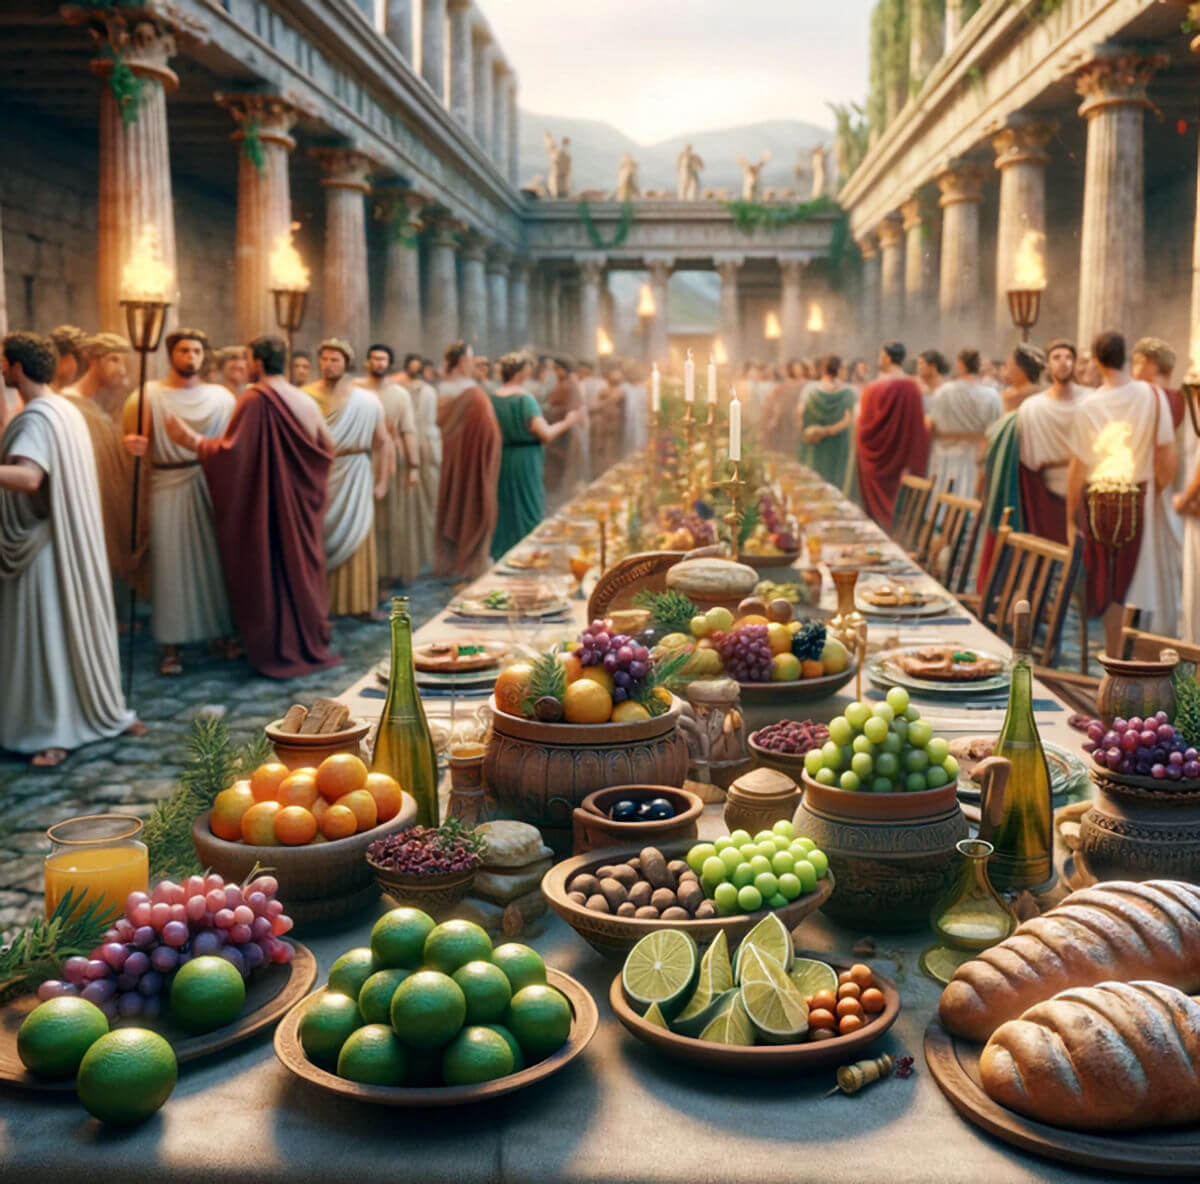 An outdoor feast at a Roman festival